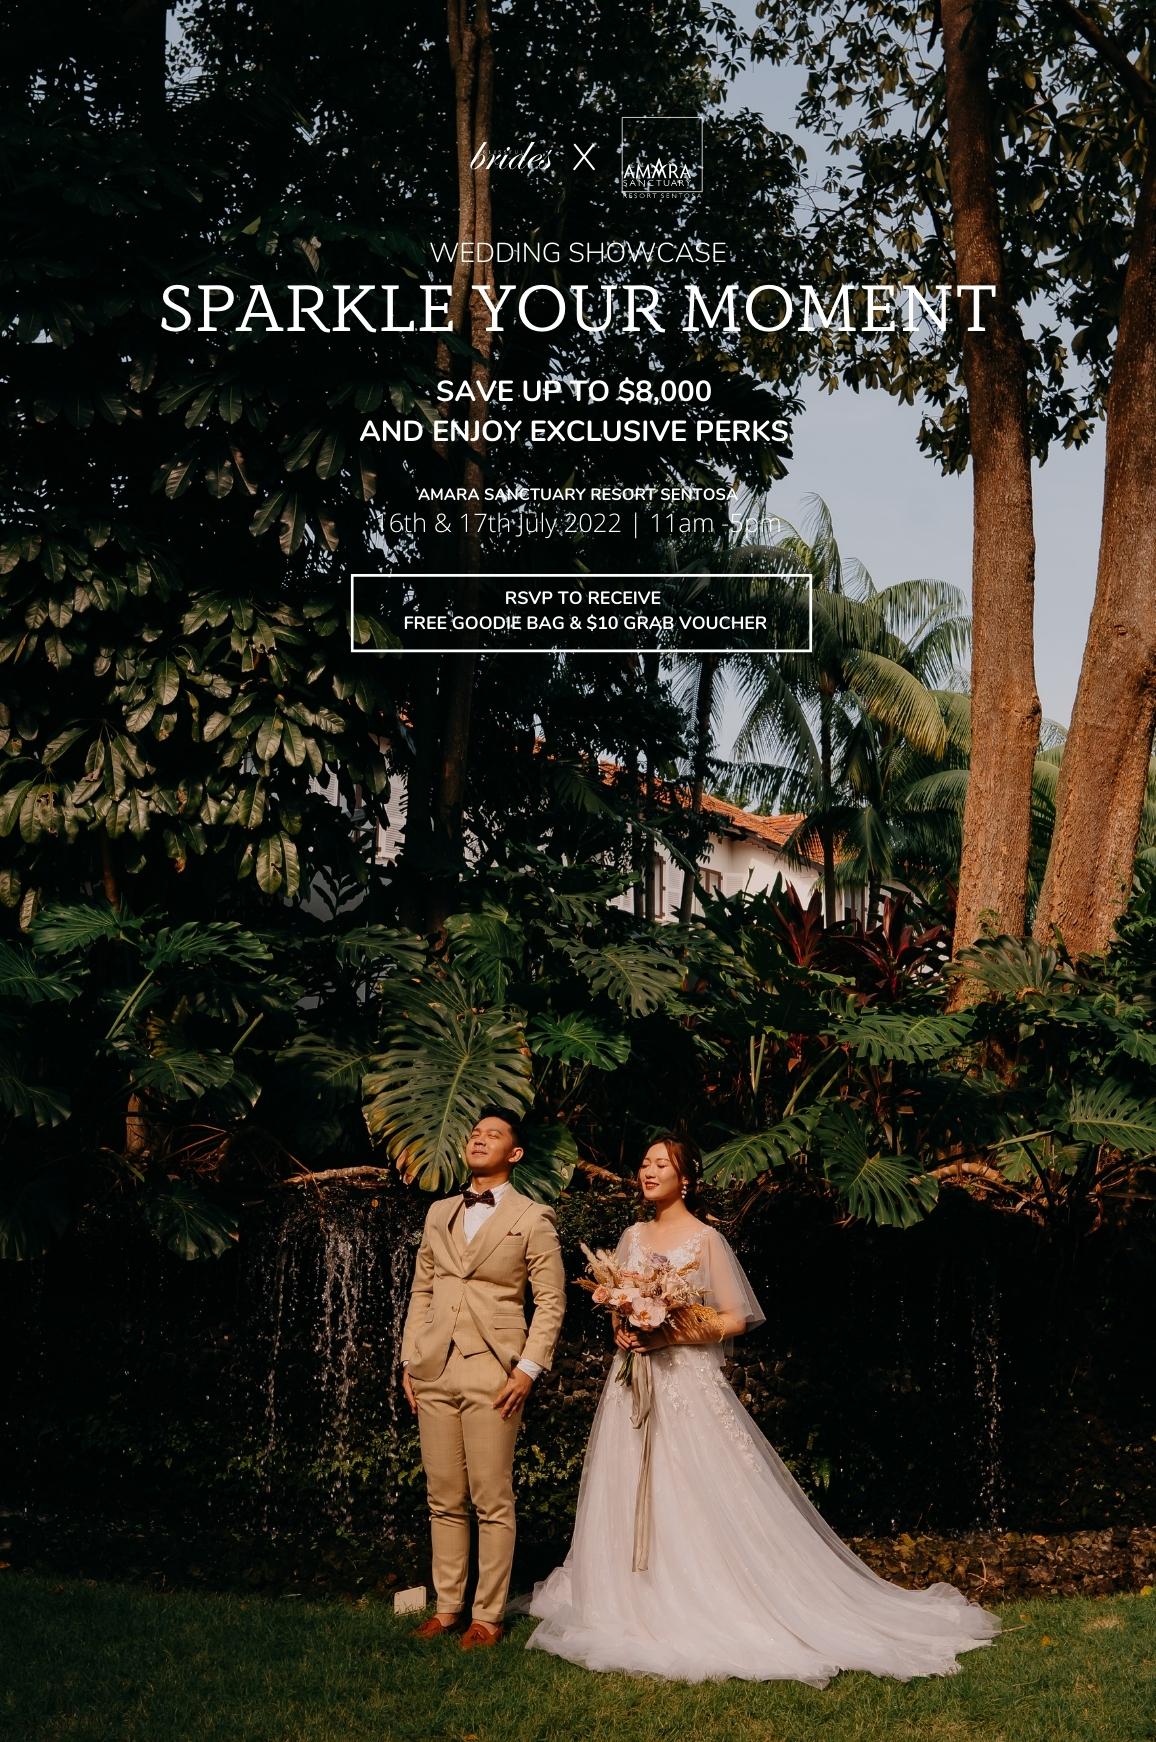 Sparkle Your Moment | Blissful Brides x Amara Sanctuary Resort Sentosa Wedding Showcase 2022